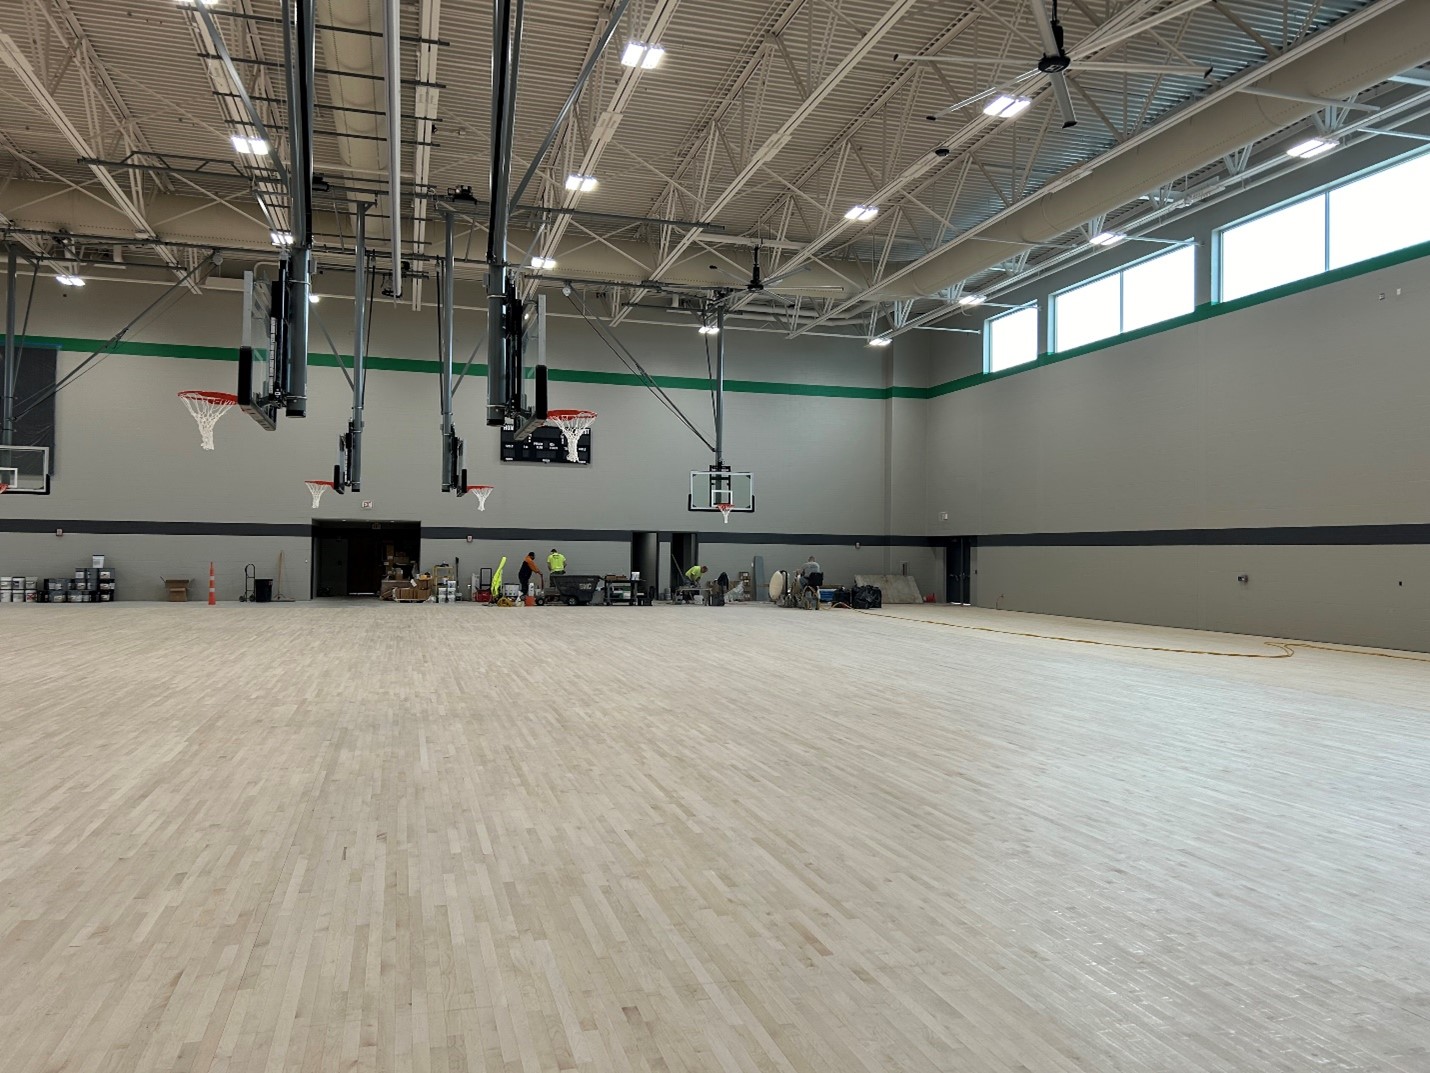 Inside New Gym Construction